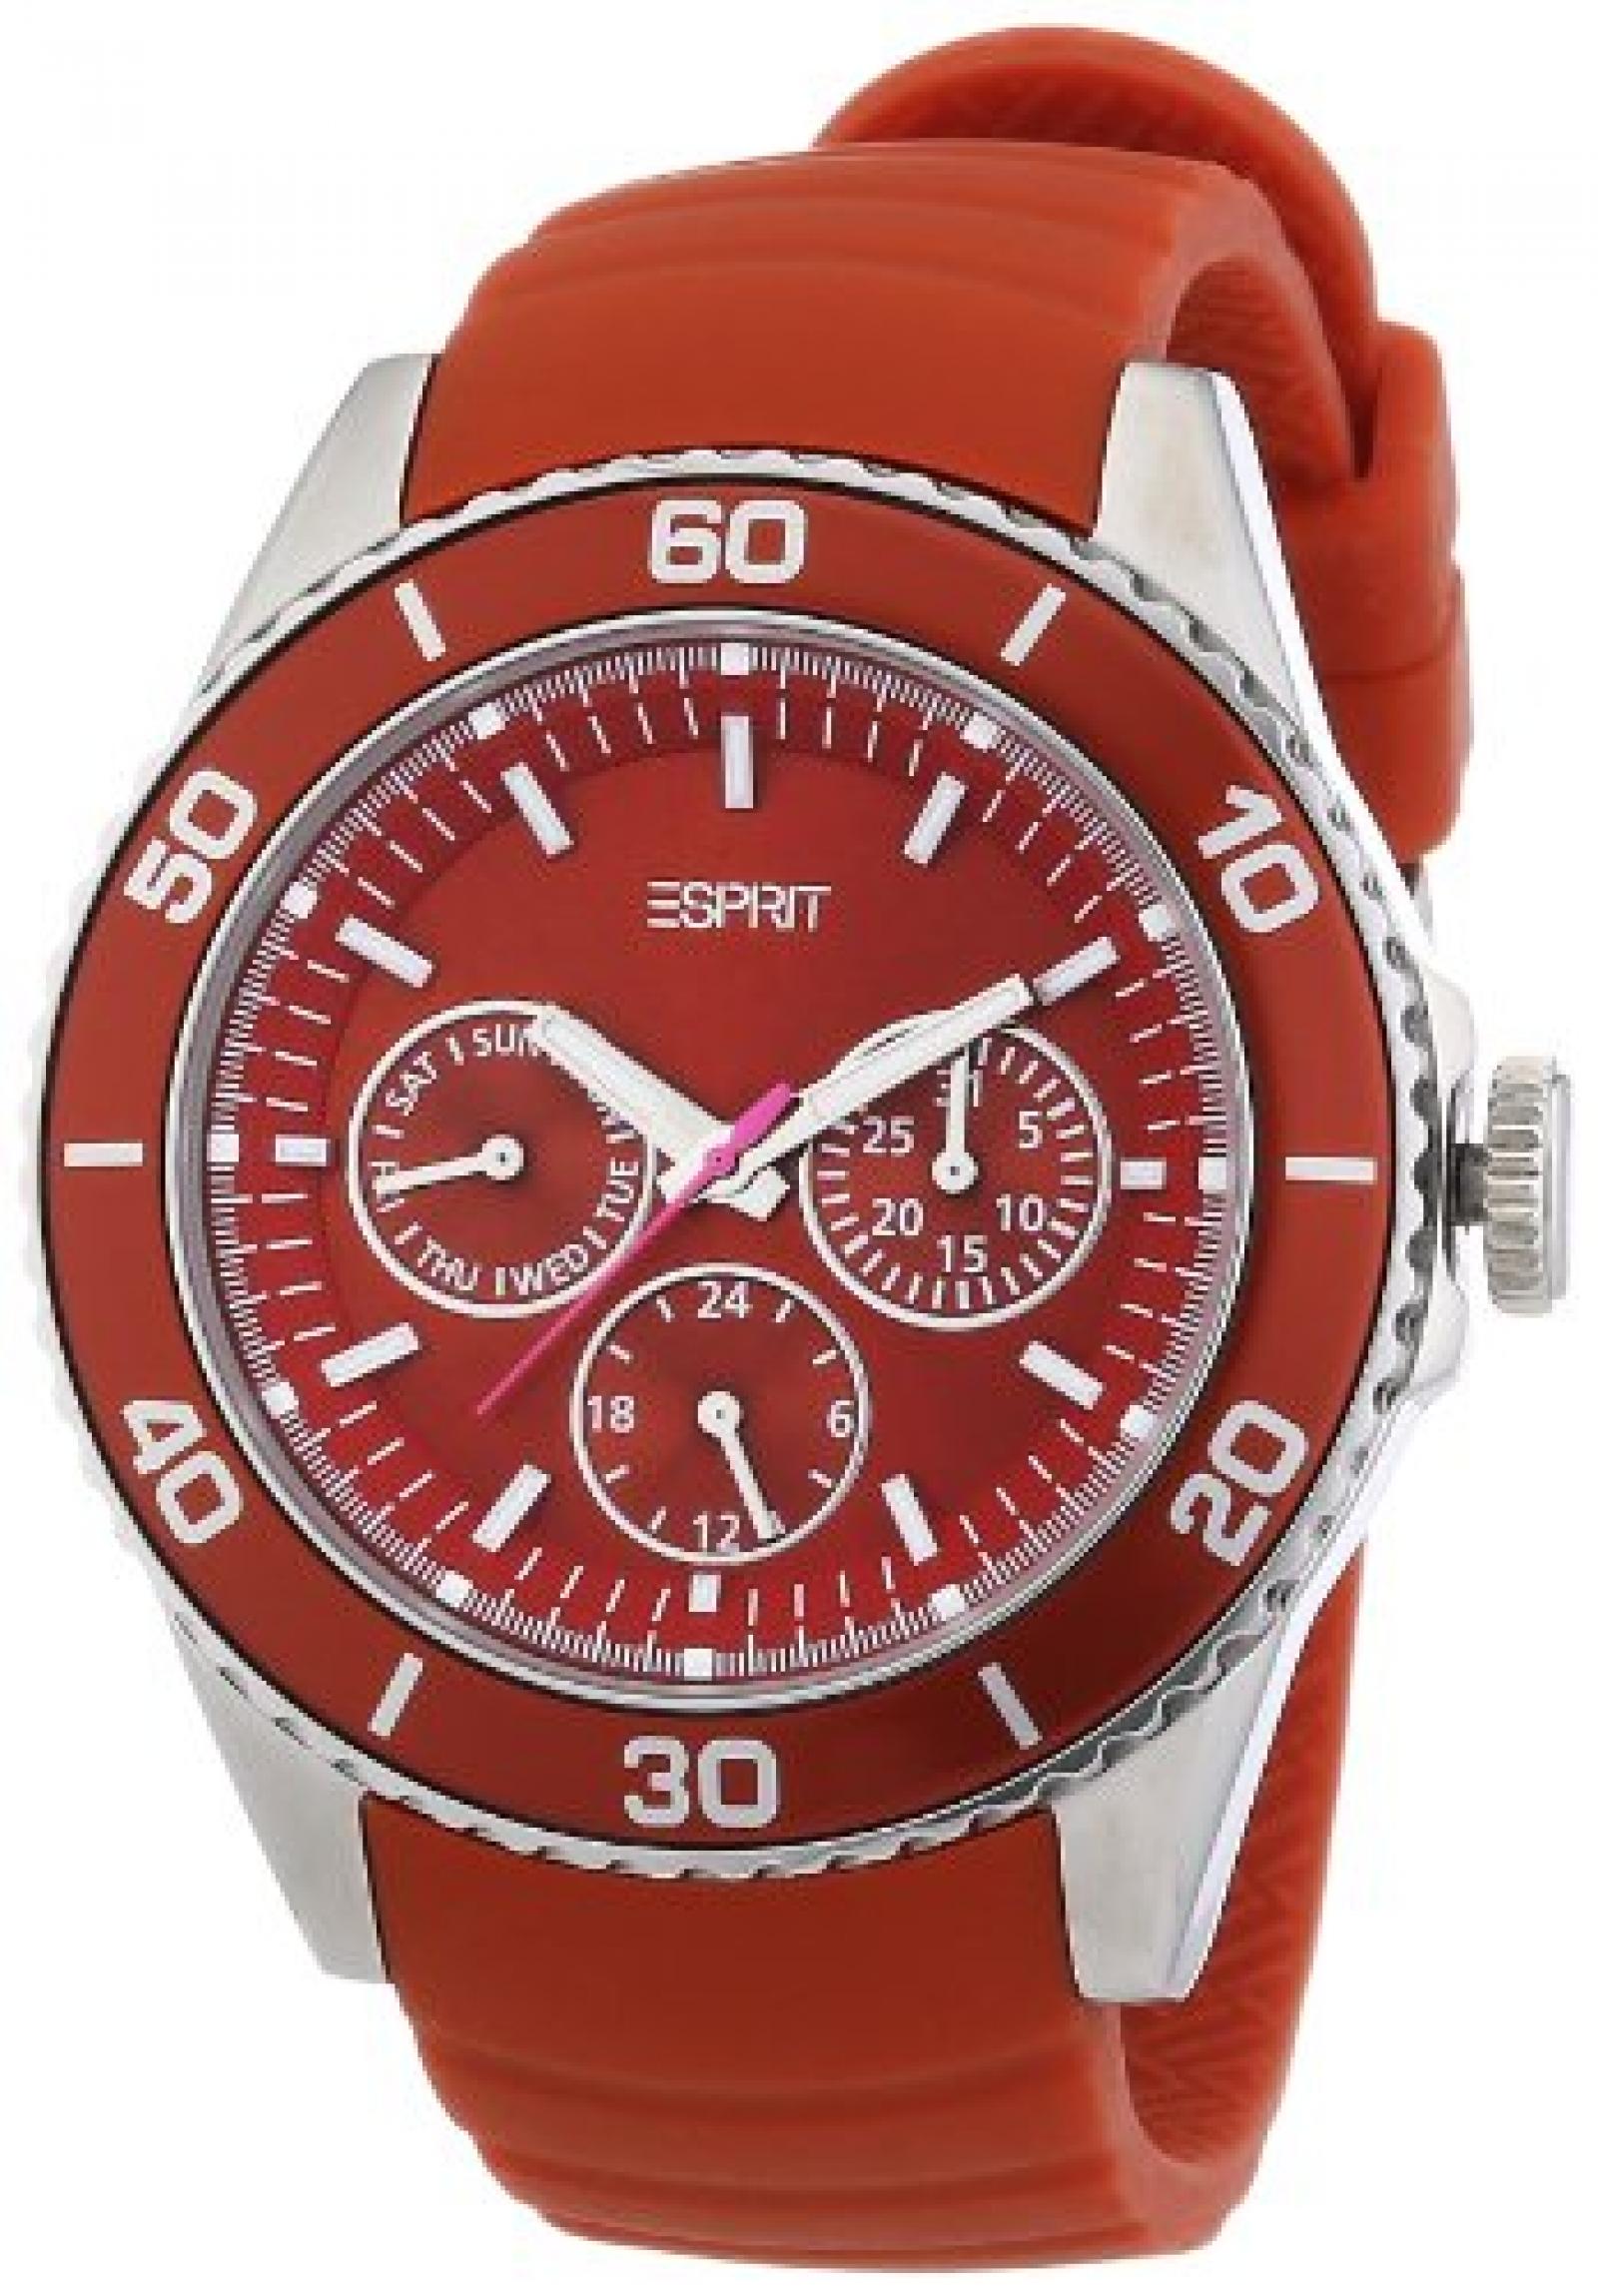 Esprit Damen-Armbanduhr deviate Analog Quarz ES103622002 